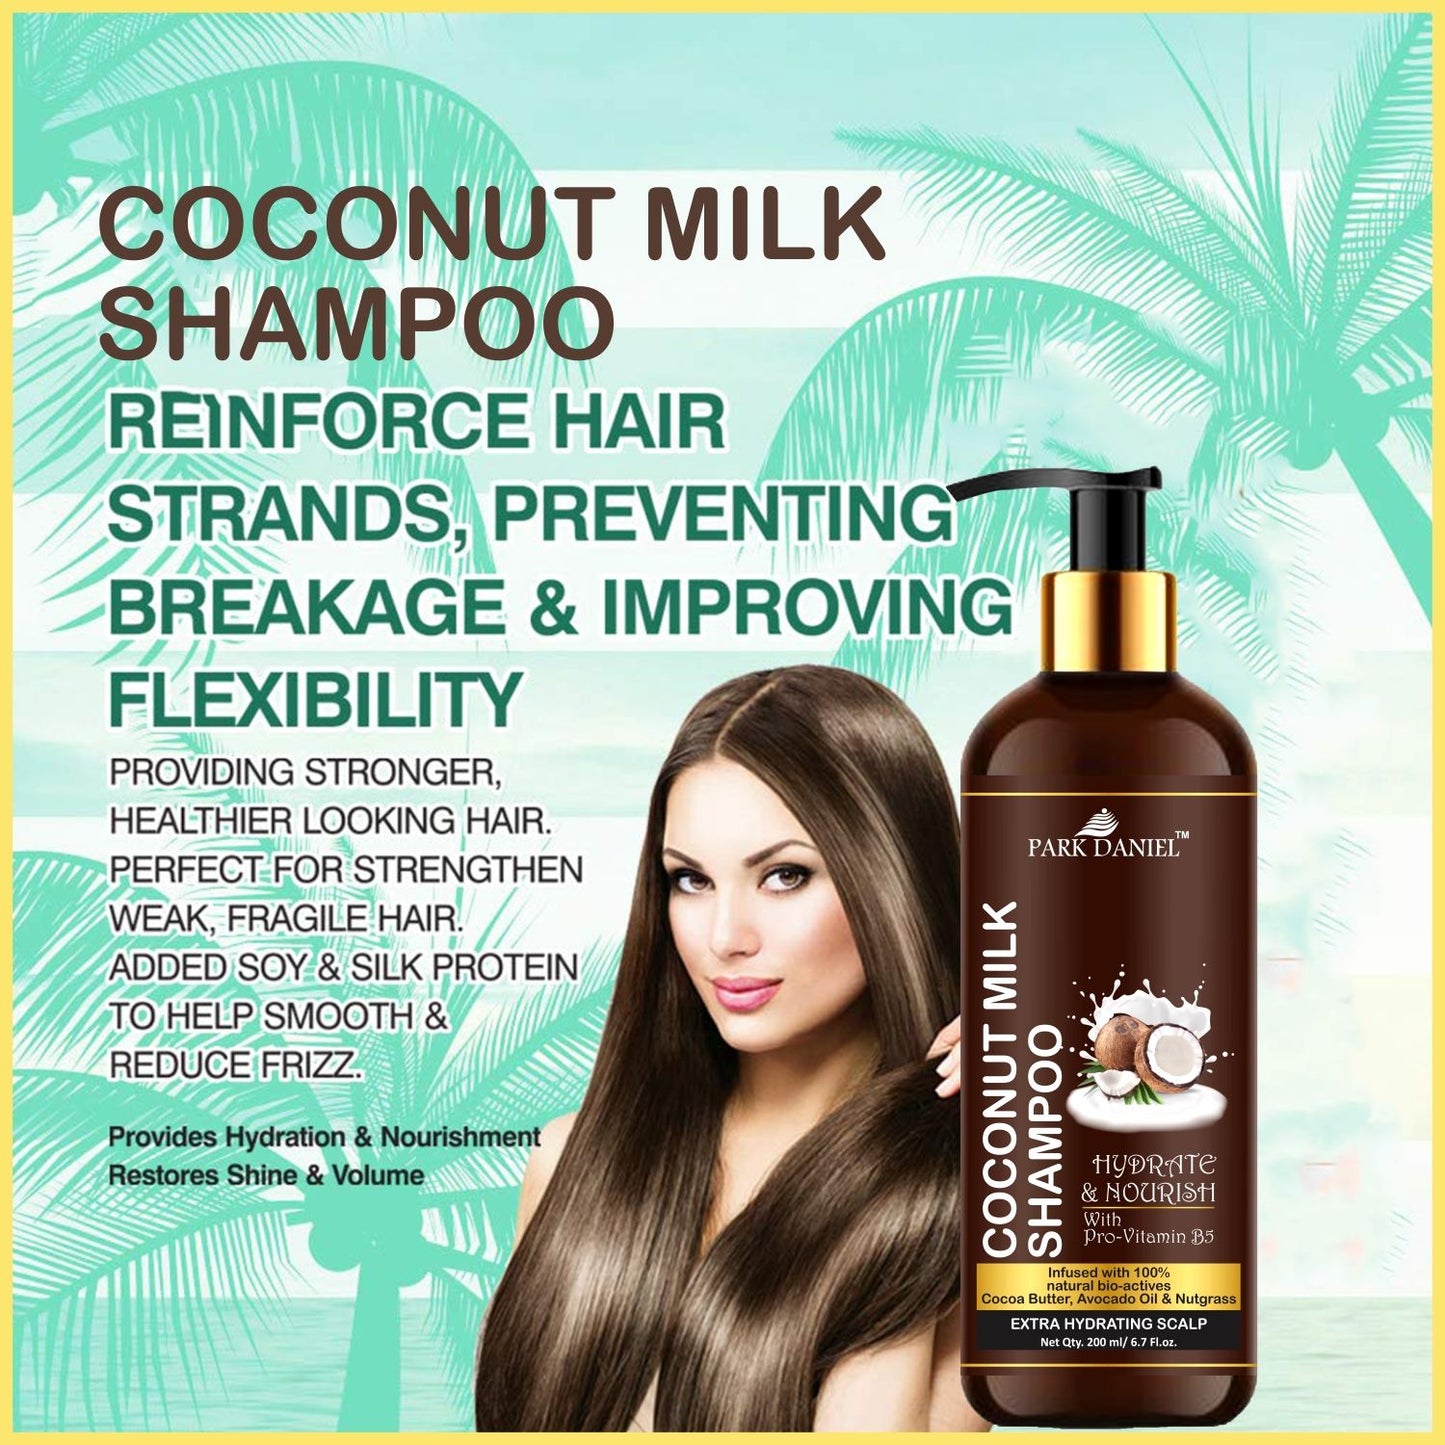 Park Daniel Natural Coconut Shampoo-For Hair Nourishment and Hair Growth(200 ml)